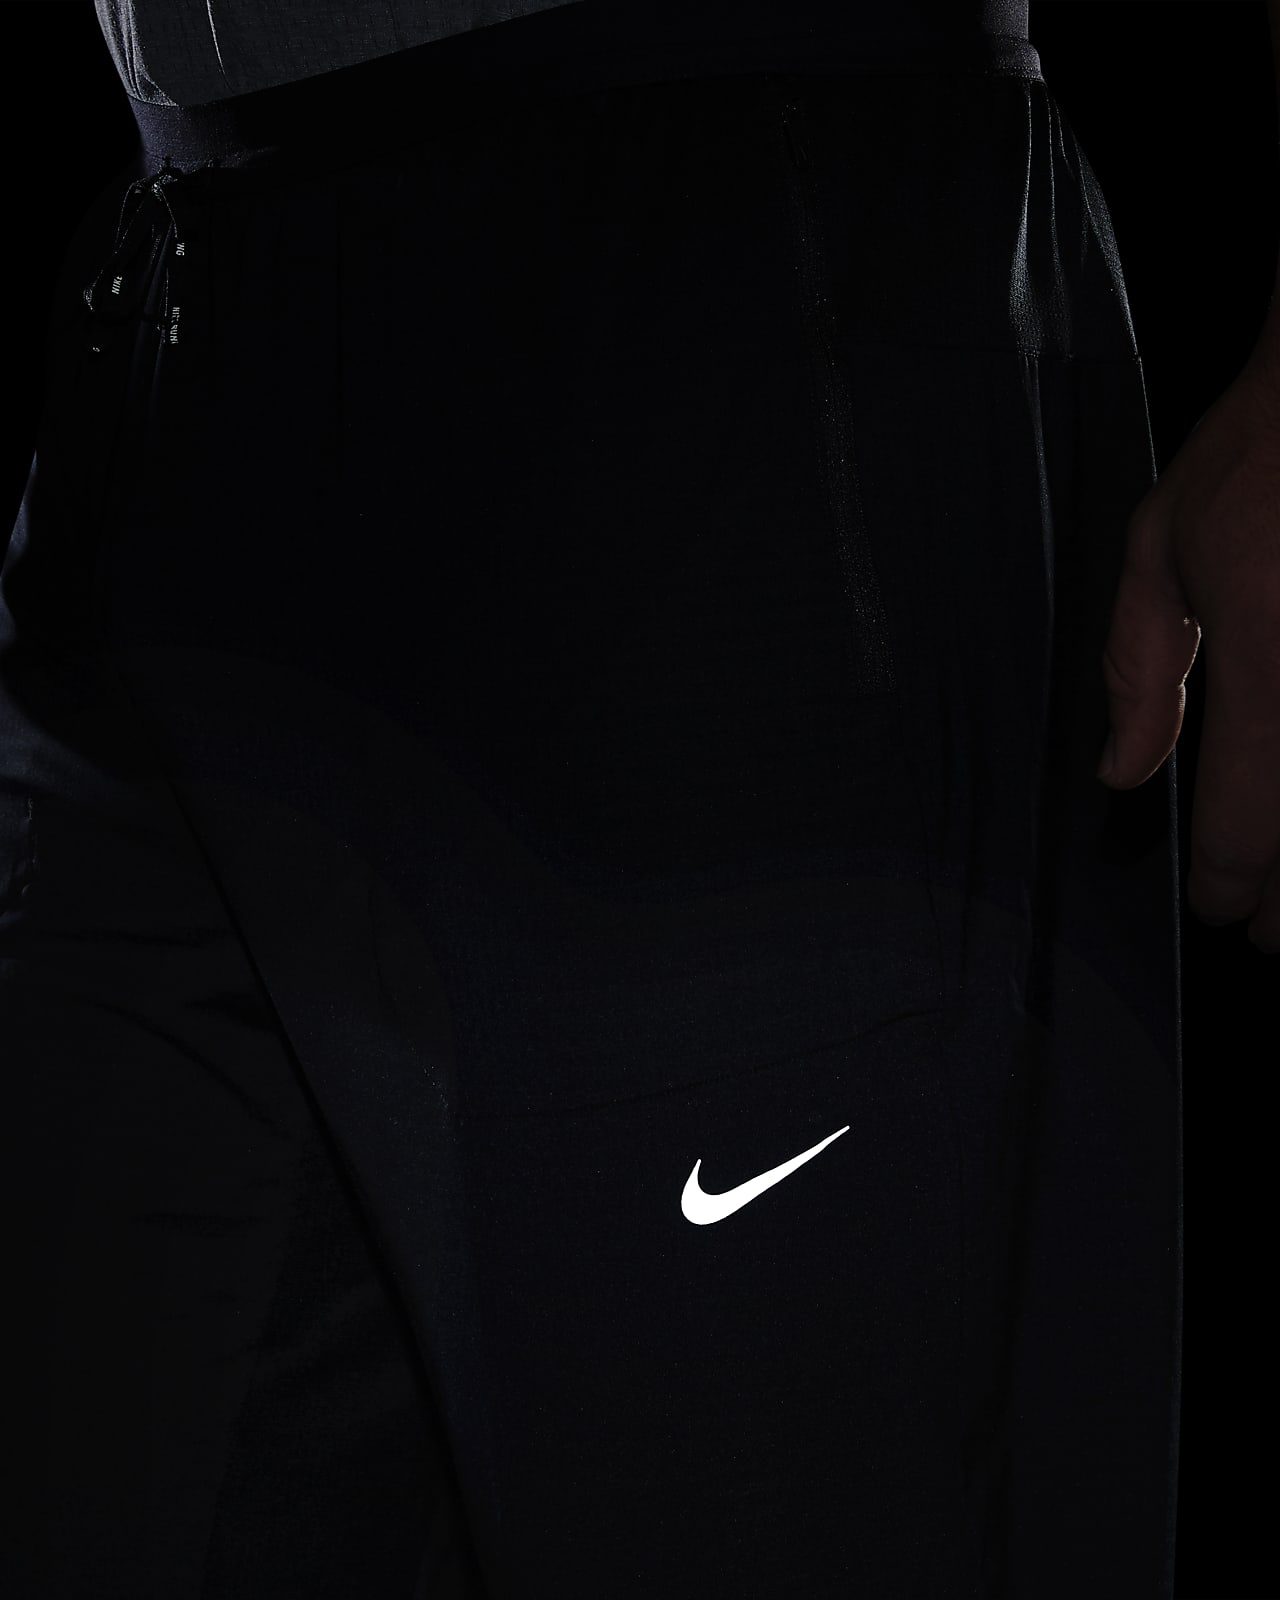 Nike phenom elite pants - Depop